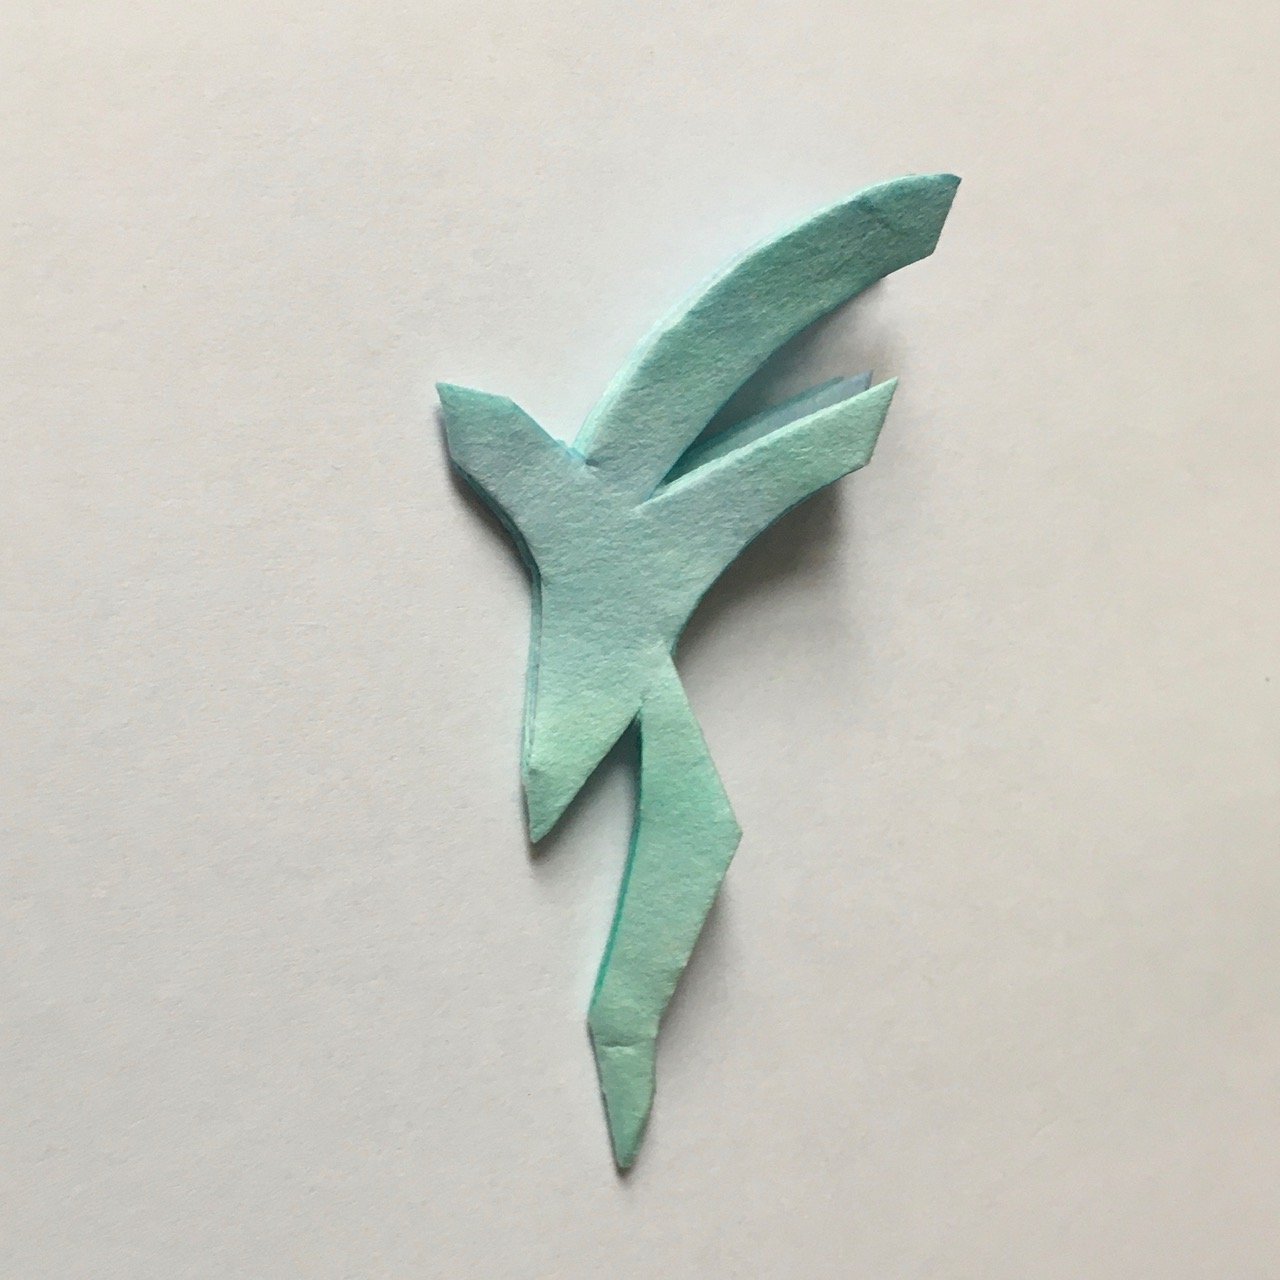 Make a giant 3D Paper snowflake - Mud & Bloom